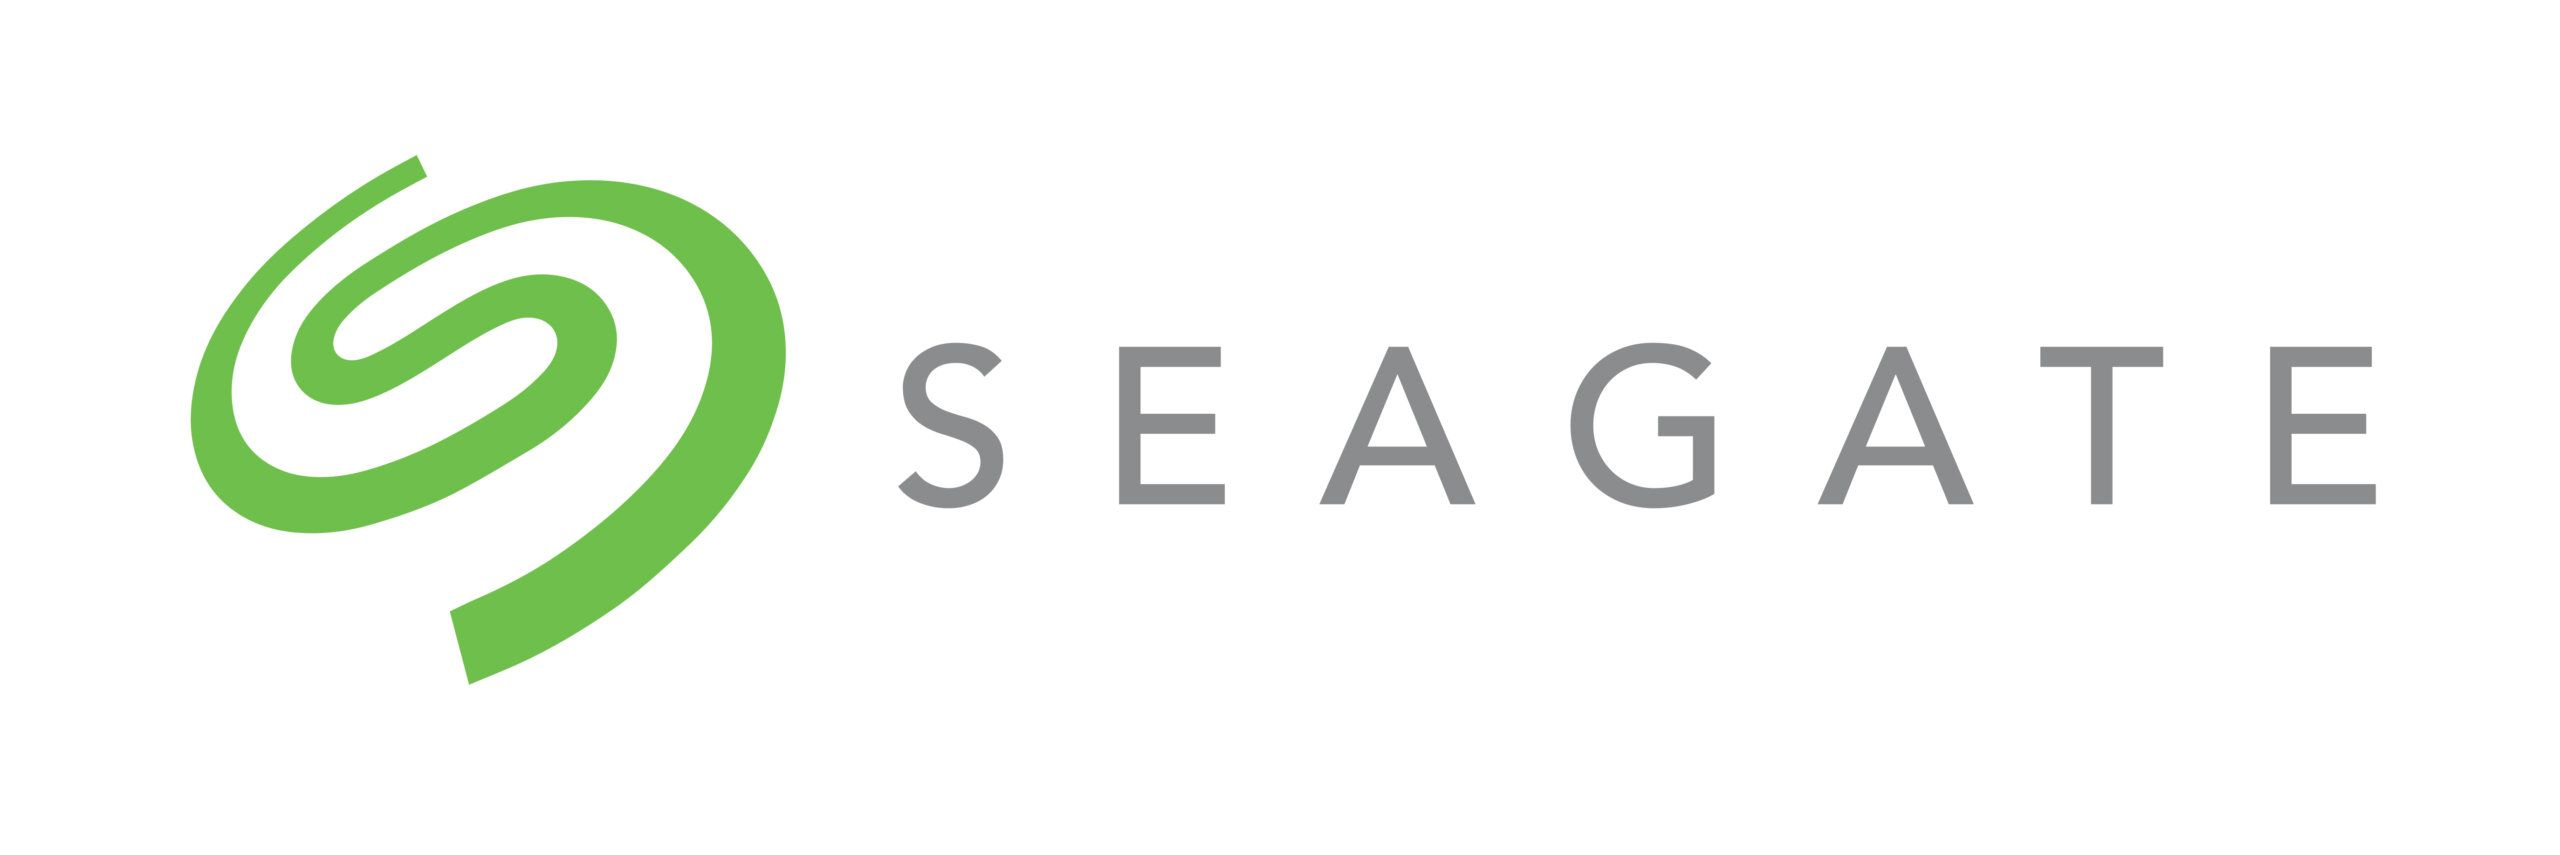 Seagate Freshers Recruitment 2019